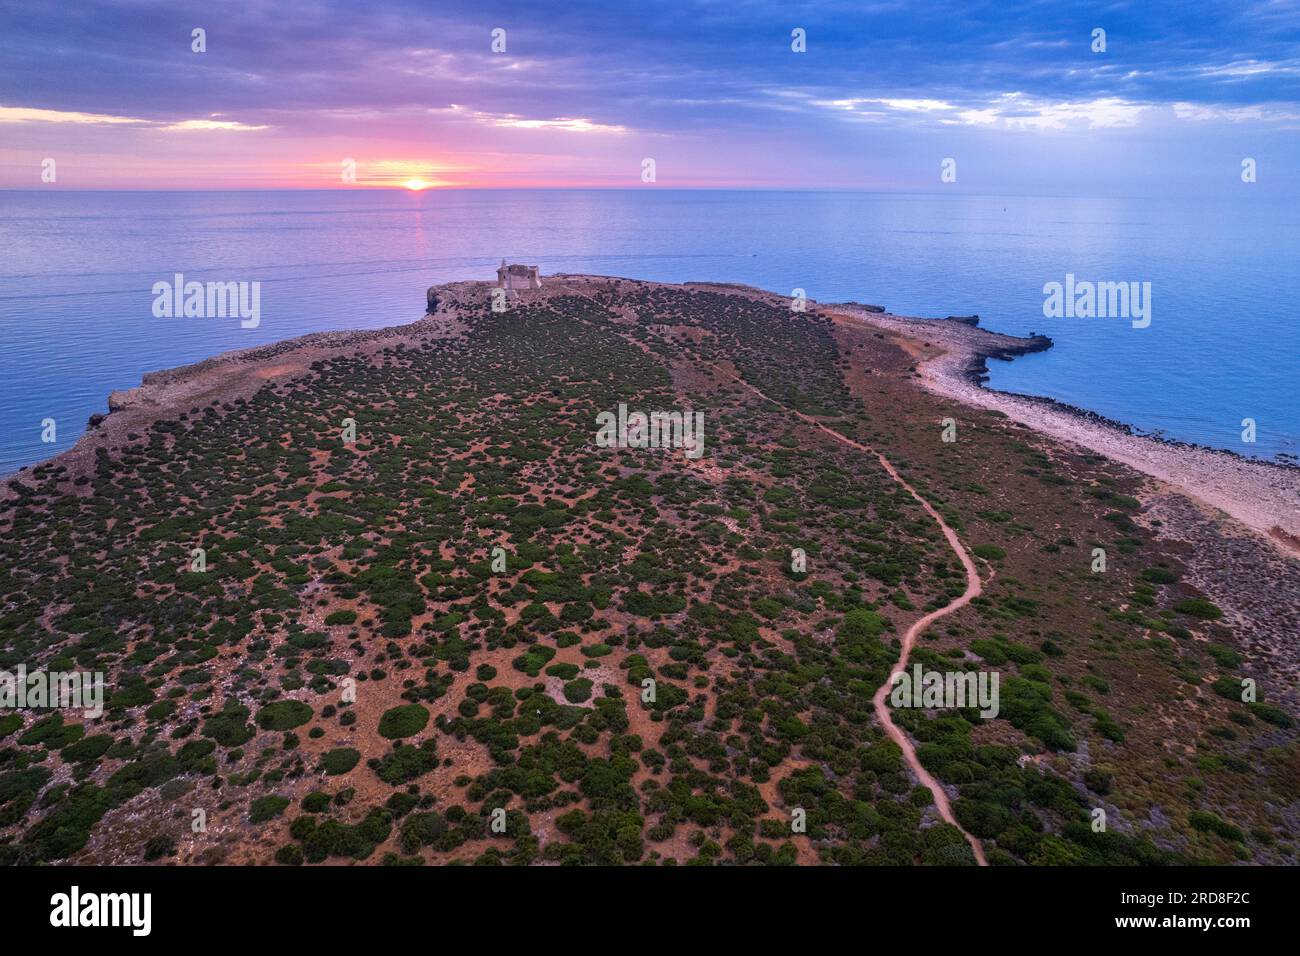 Die Insel Capo Passero bei Sonnenaufgang, die Gemeinde Portopalo di Capo Passero, die Provinz Siracusa, Sizilien, Italien, das Mittelmeer, Europa Stockfoto